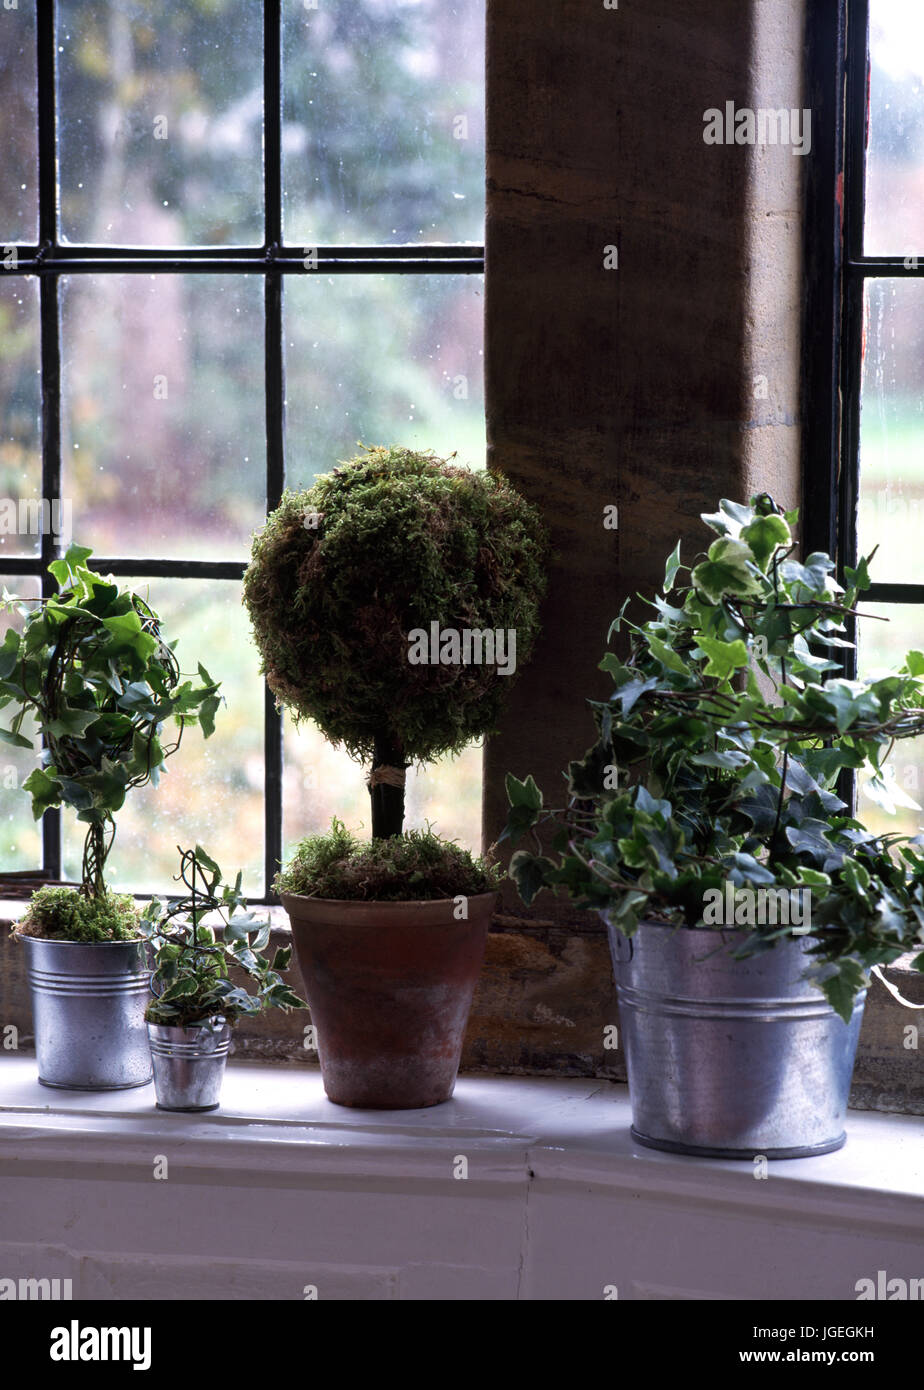 Plants in metal and terrtacottas pots on window ledge Stock Photo